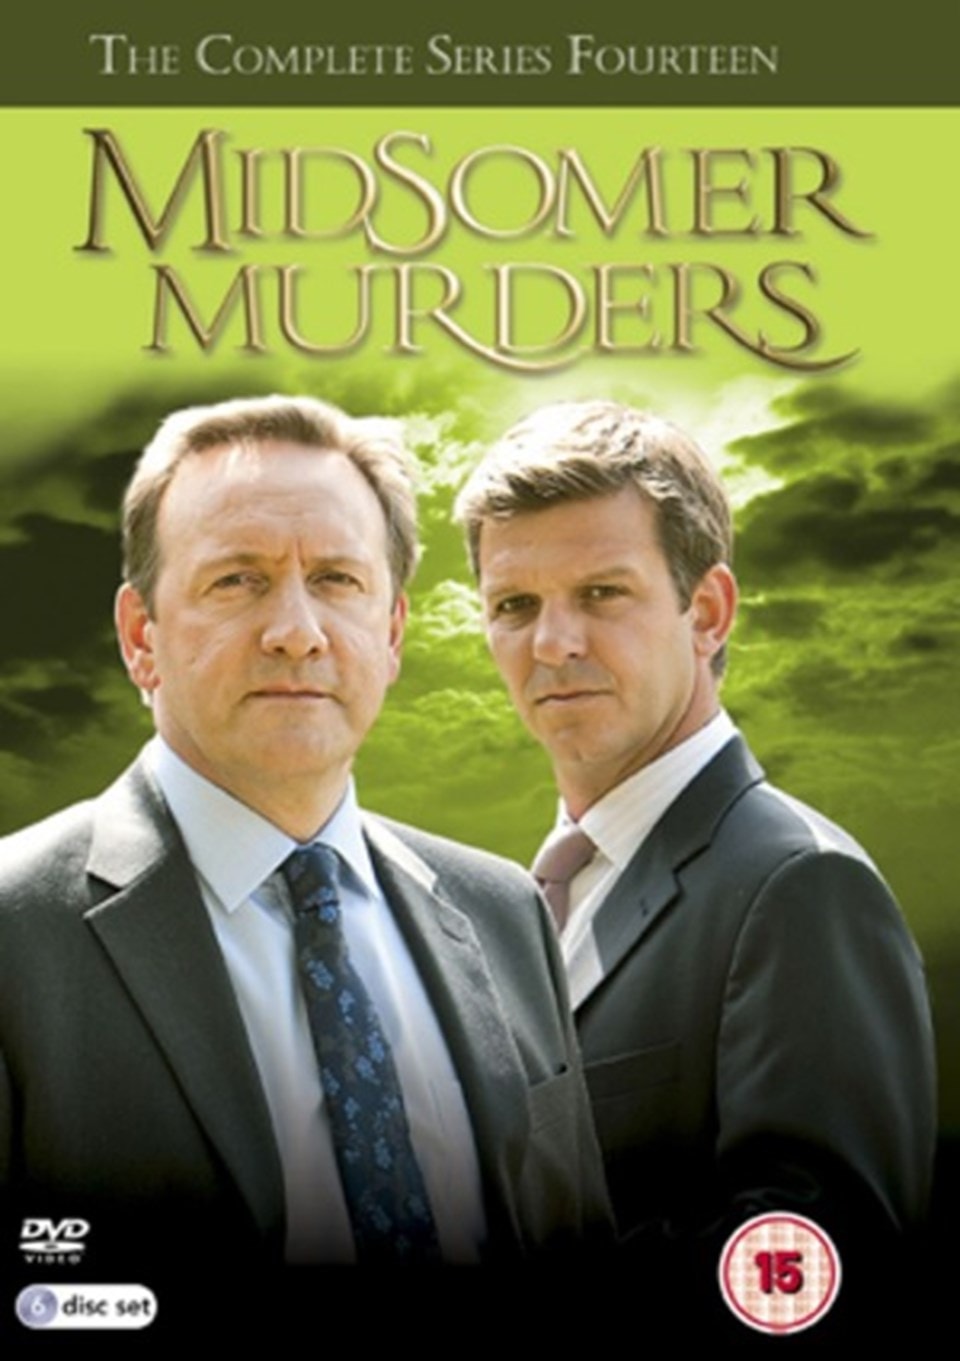 Midsomer Murders: The Complete Series Fourteen | DVD Box Set | Free ...